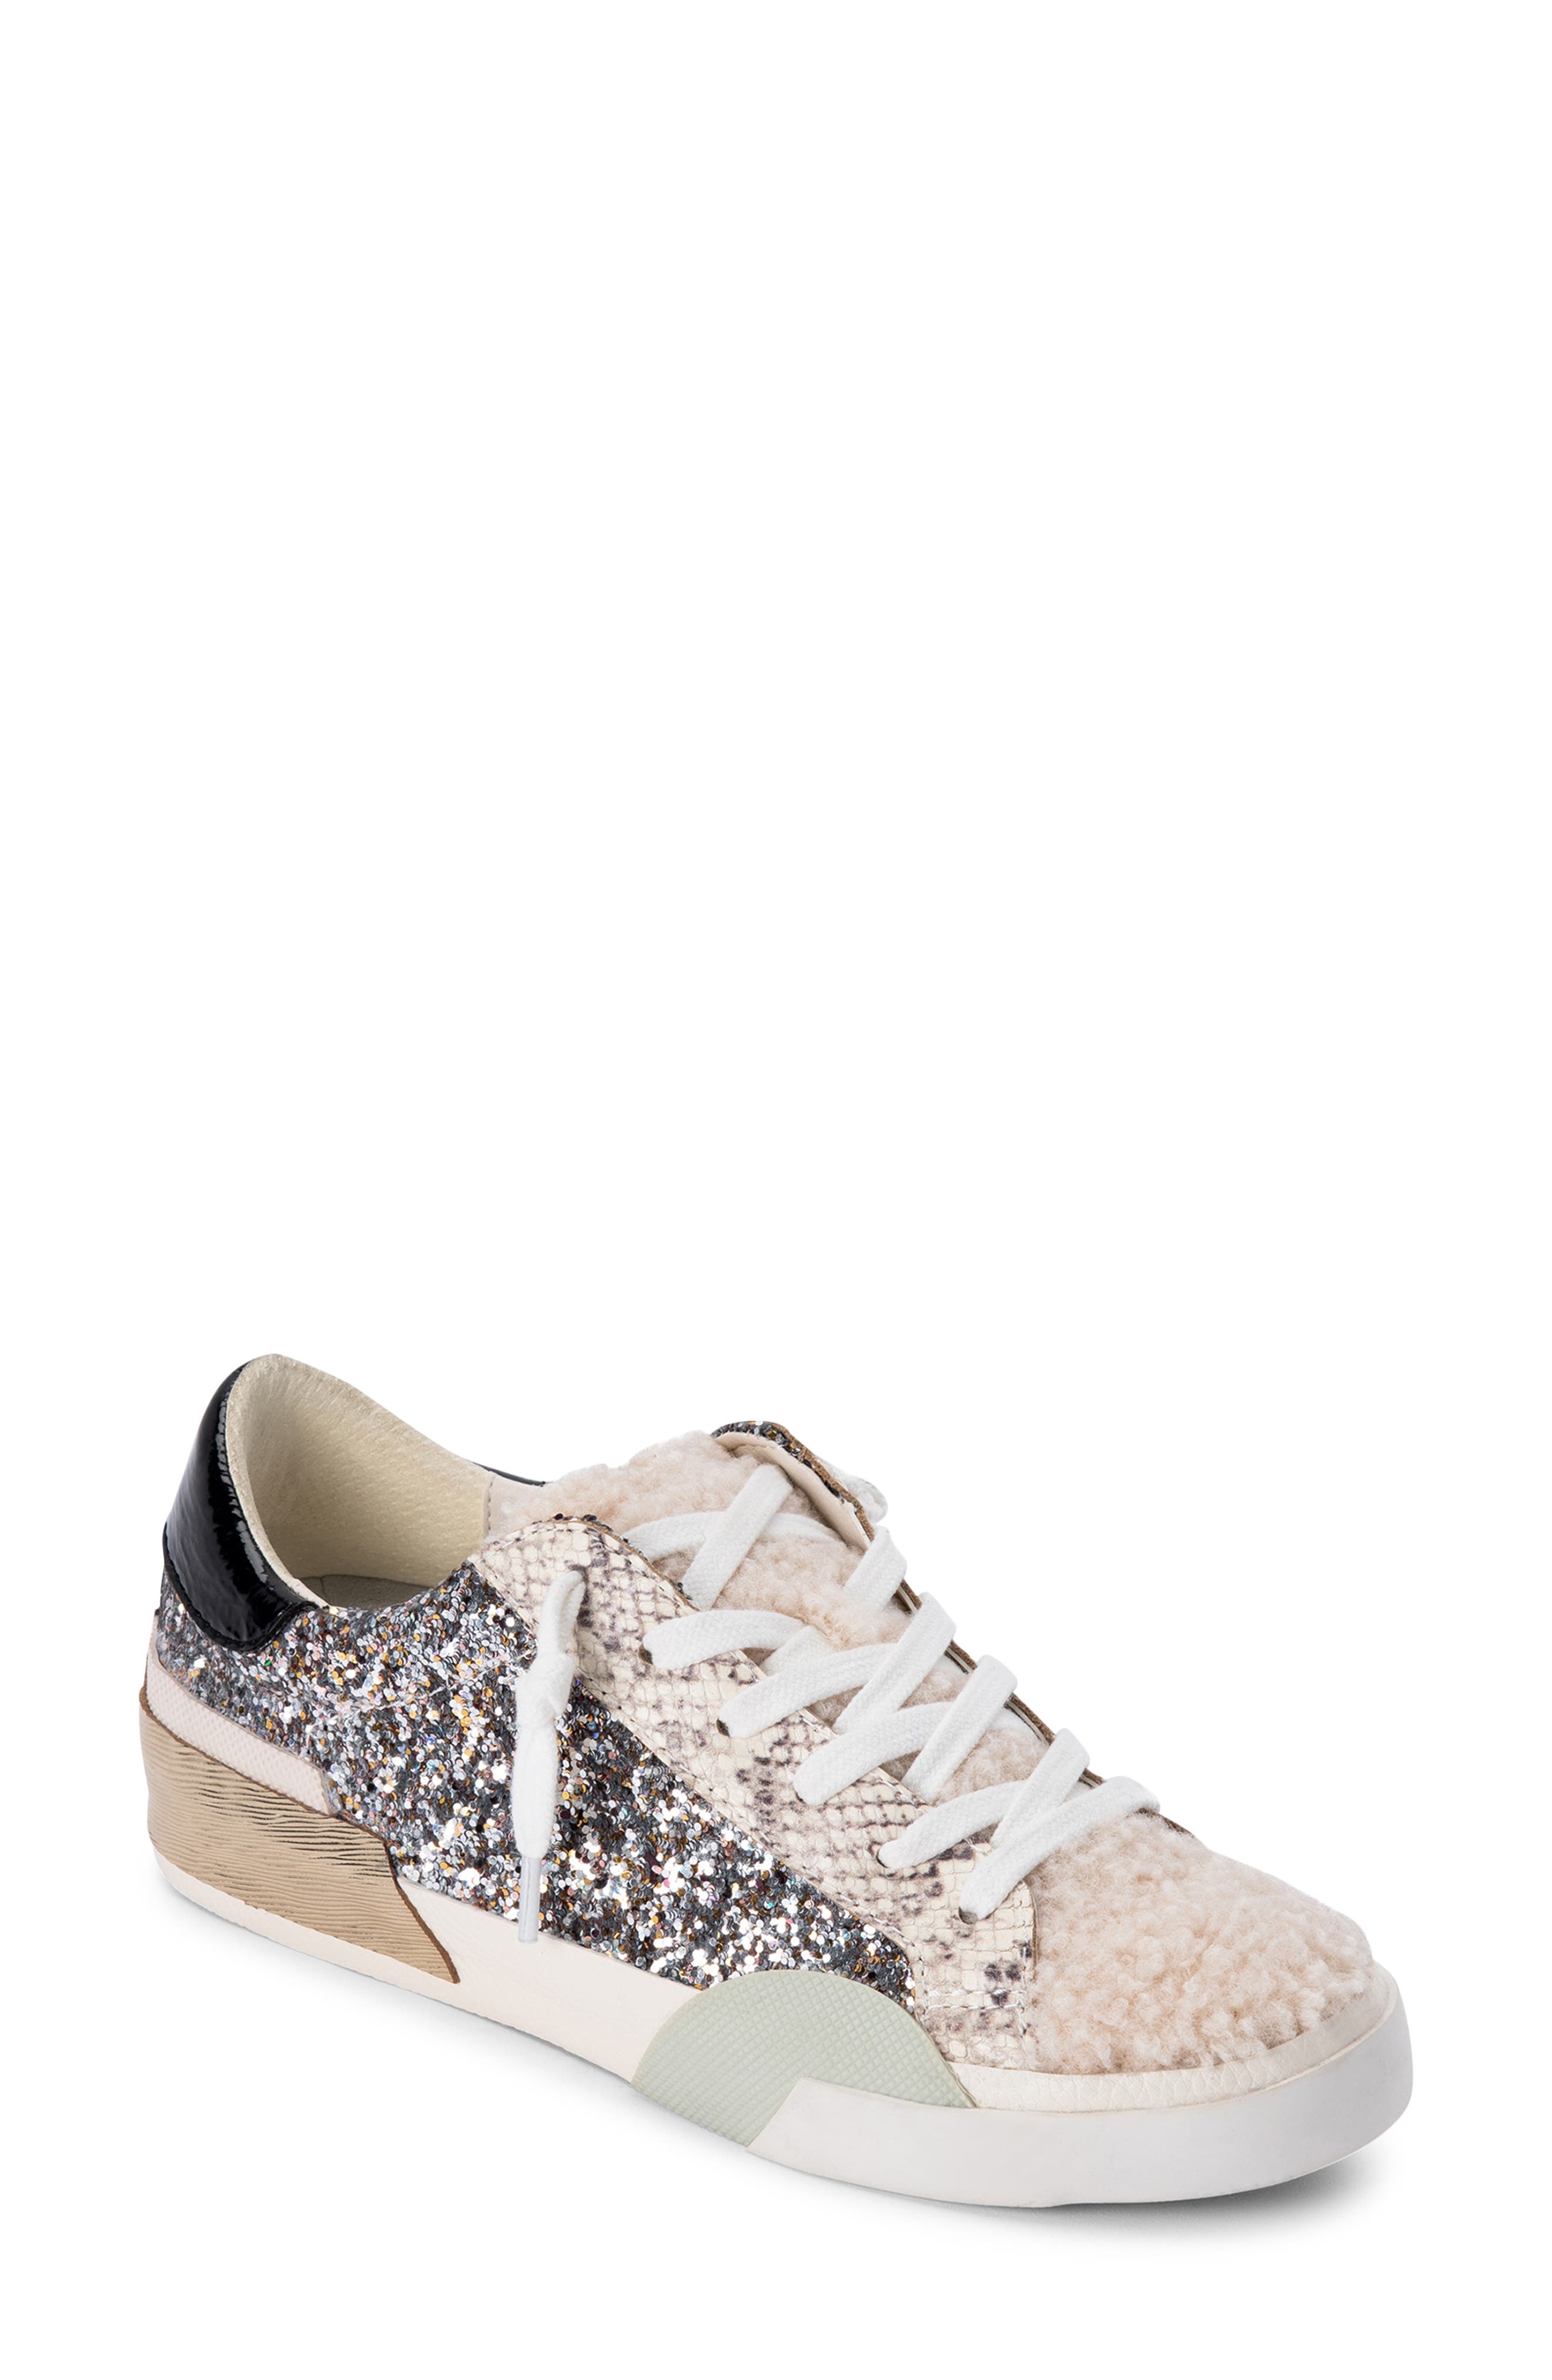 womens silver glitter tennis shoes